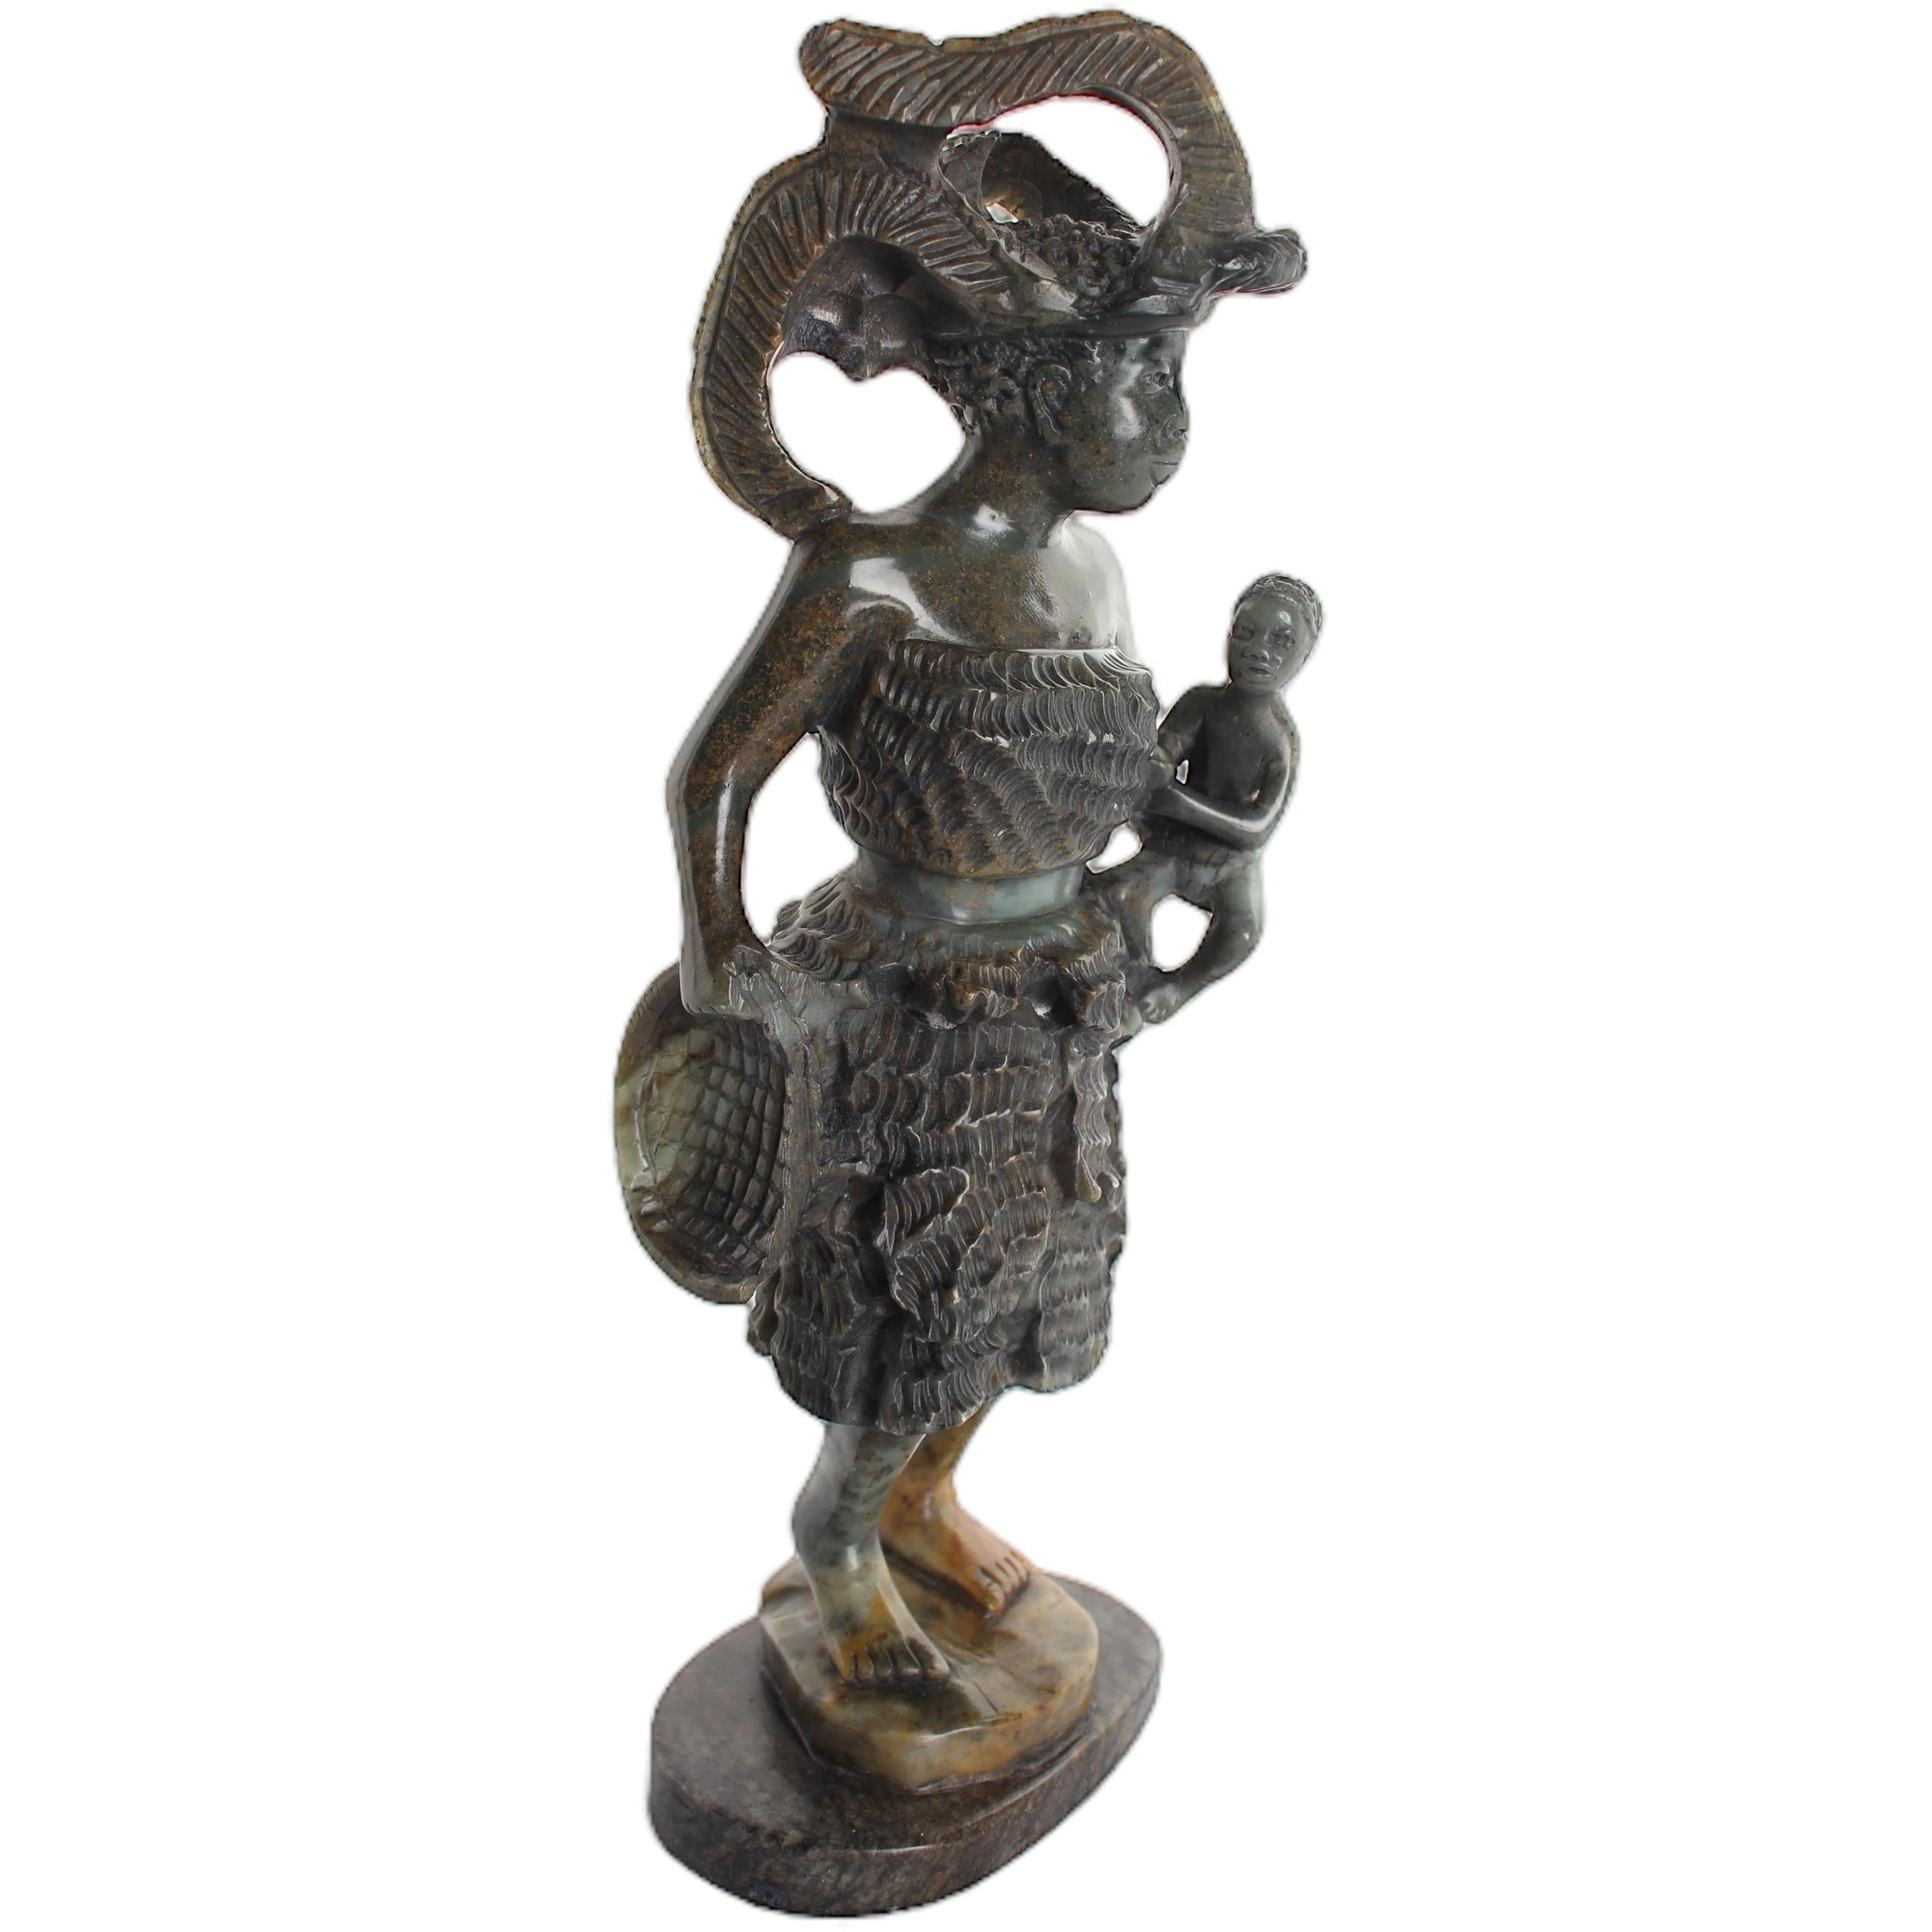 Shona Tribe Serpentine Stone Warrior Figure ~11.4" Tall - Warrior Figure